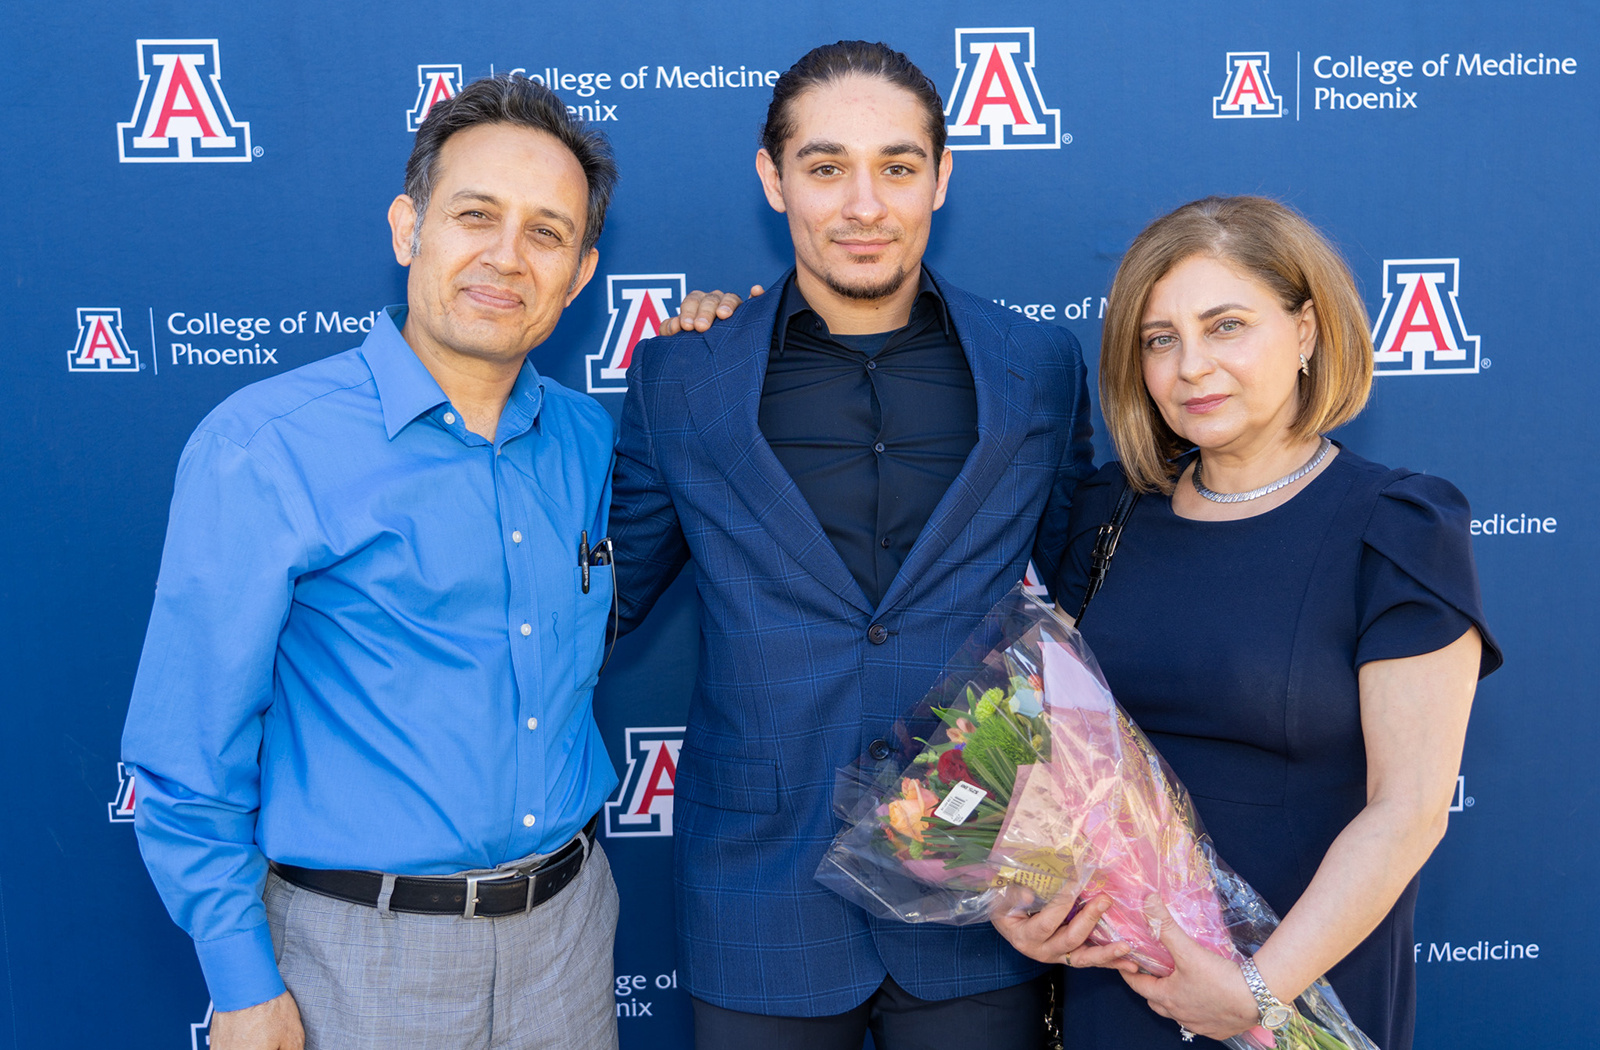 Alireza Moussavi with his parents at the Pathway Scholars celebration